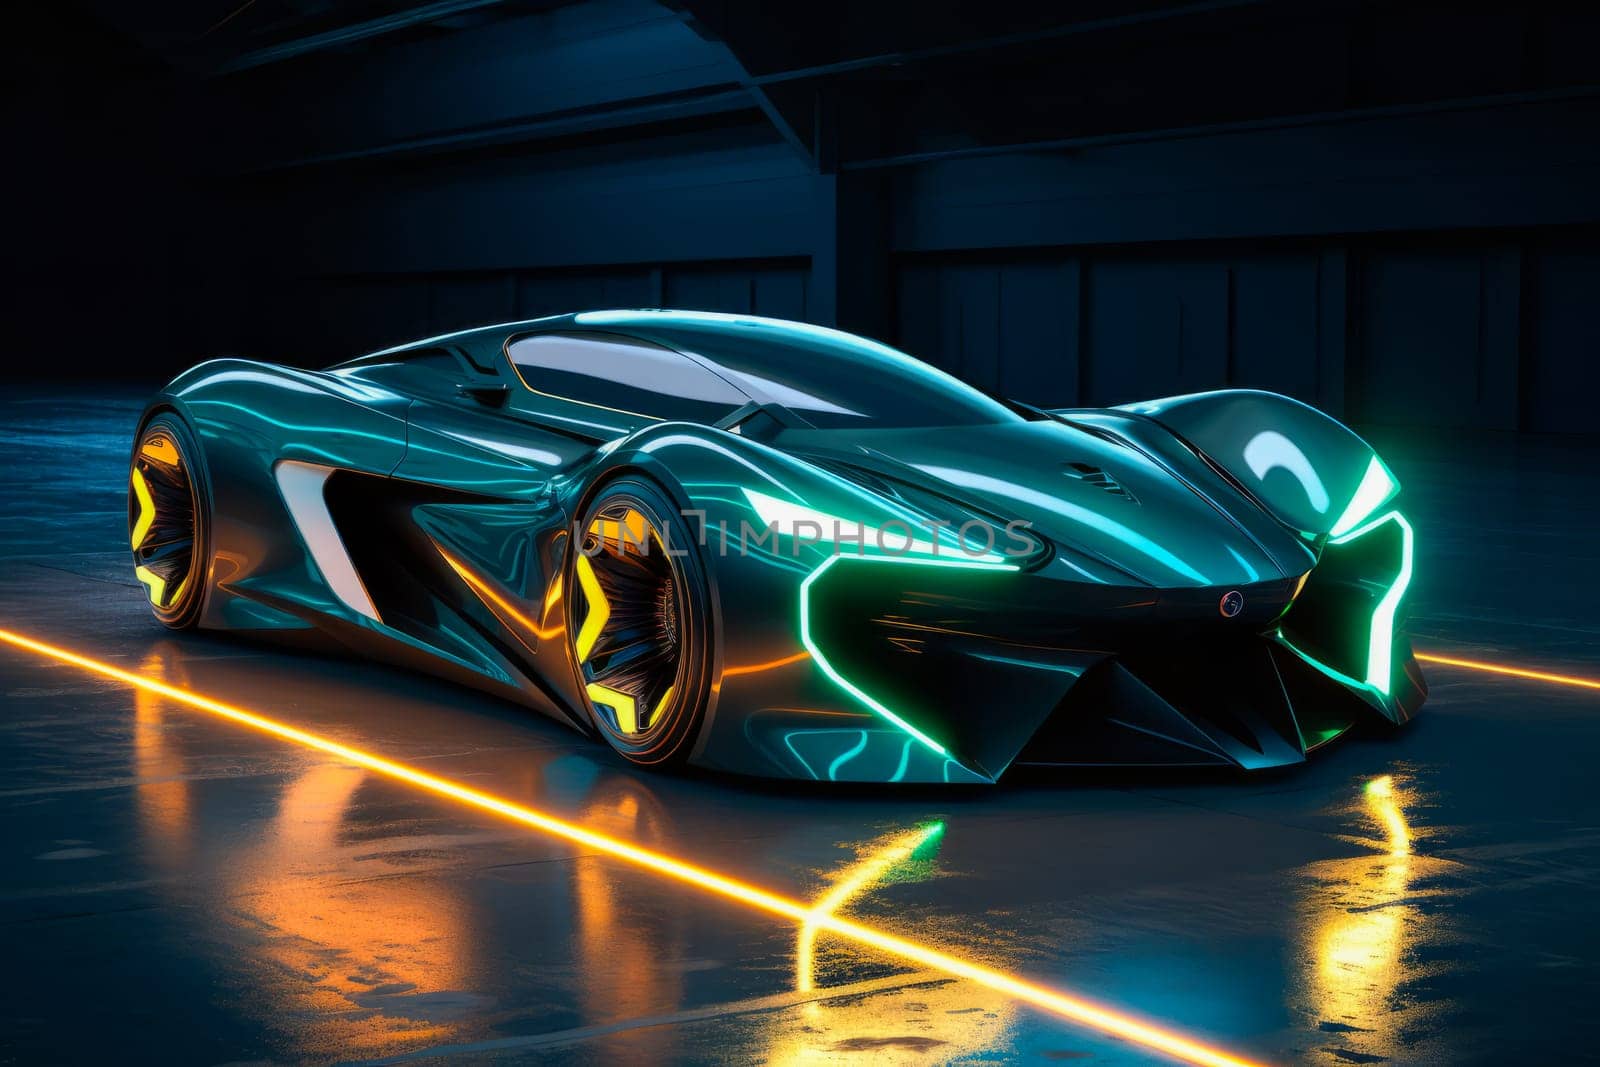 A Futuristic Car with Glowing Floor Lights by vladimka